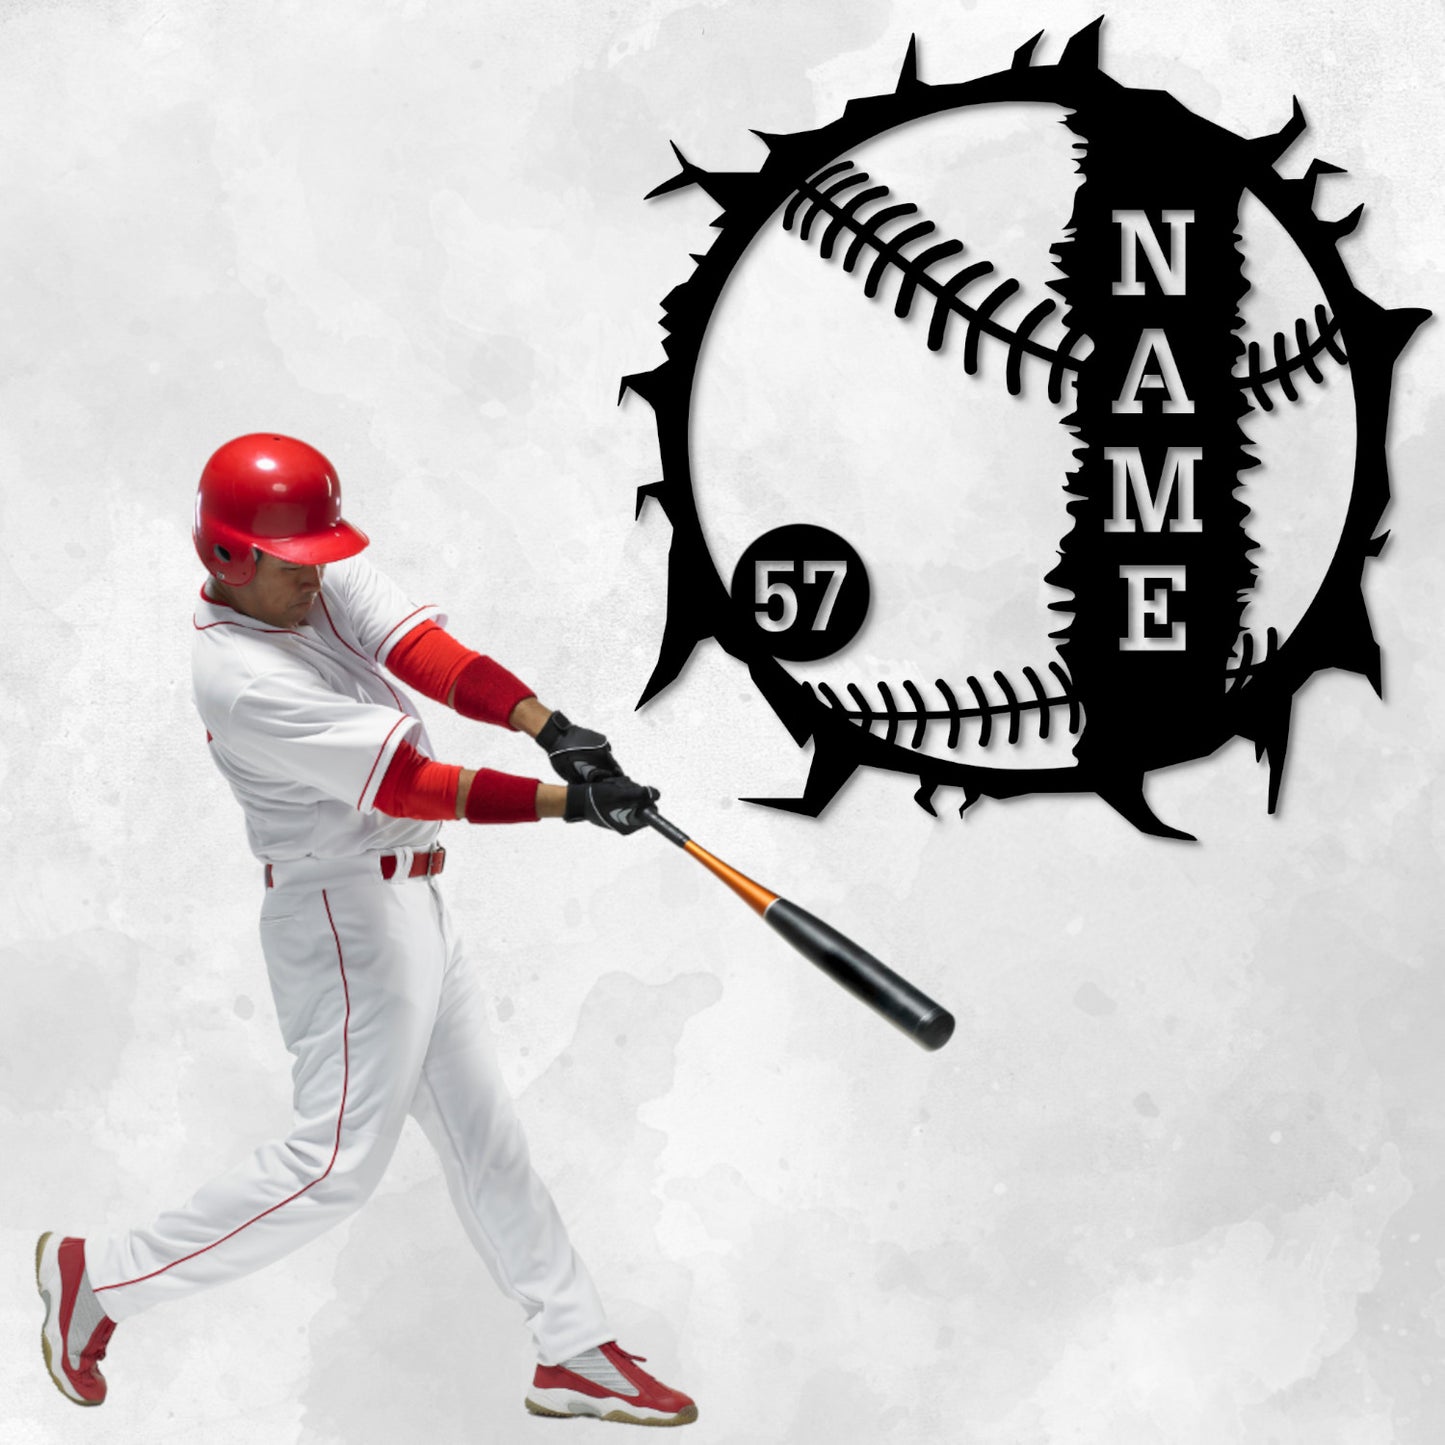 Personalized Baseball Breakthrough Name Metal Sign | Sports Name Wall Decor | Custom Softball Player Wall Hanging - Gift For Baseball Player